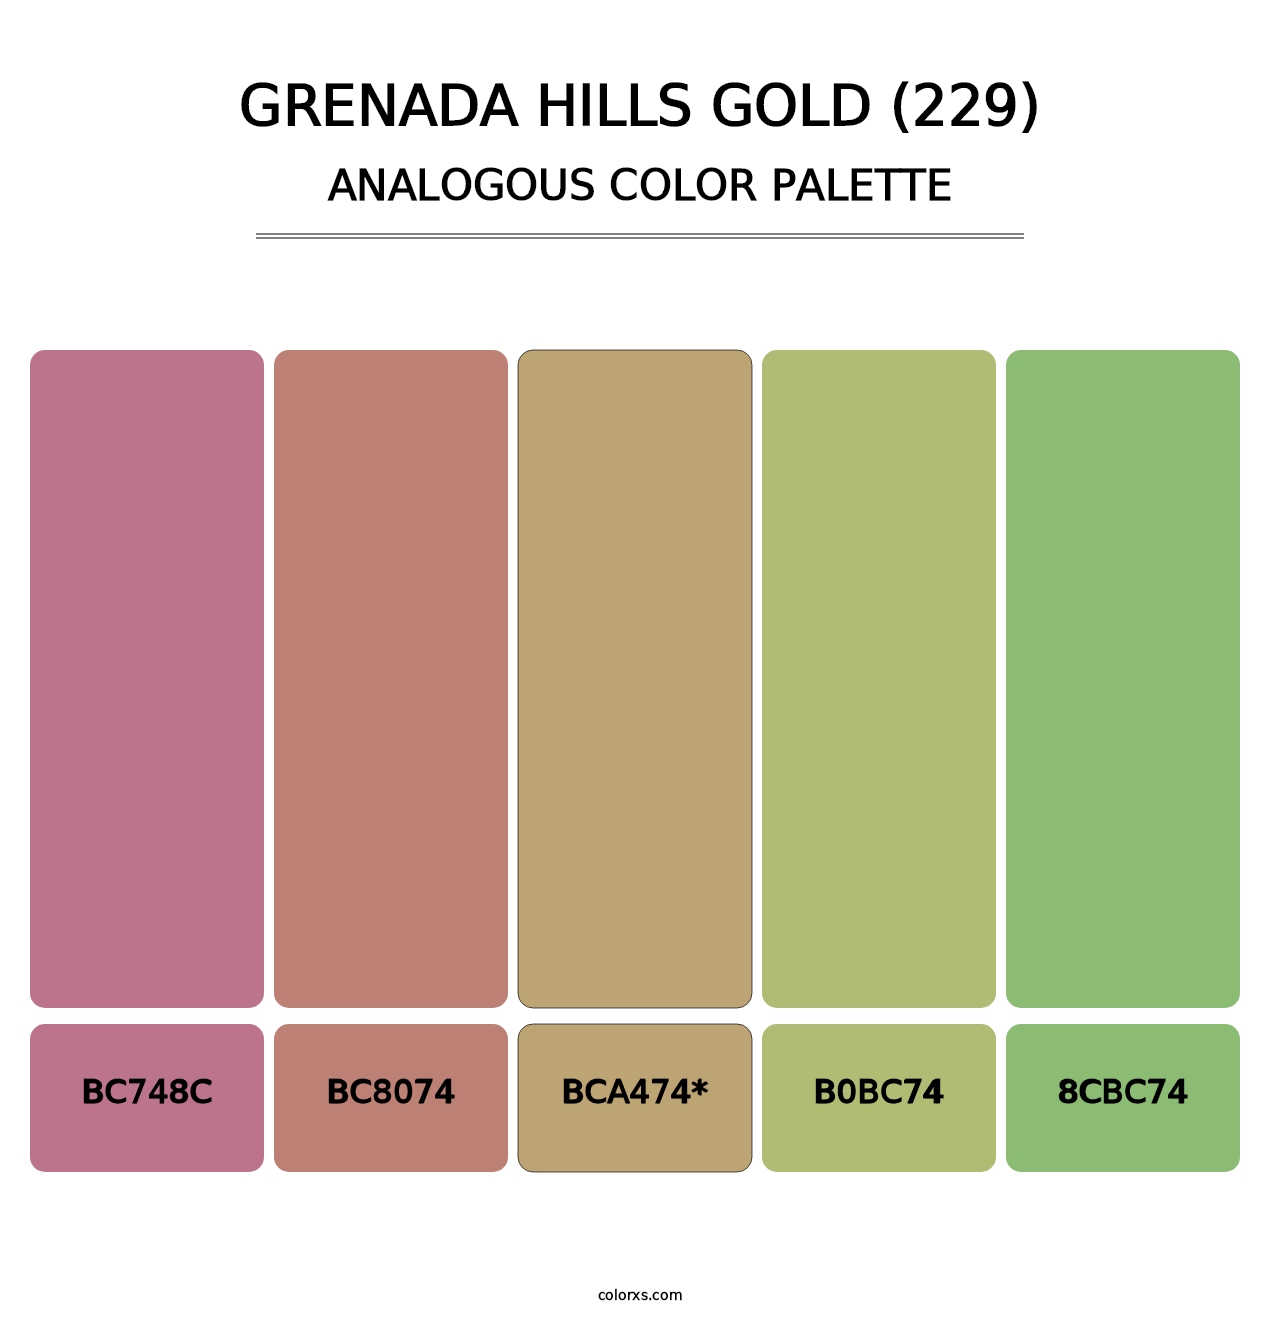 Grenada Hills Gold (229) - Analogous Color Palette